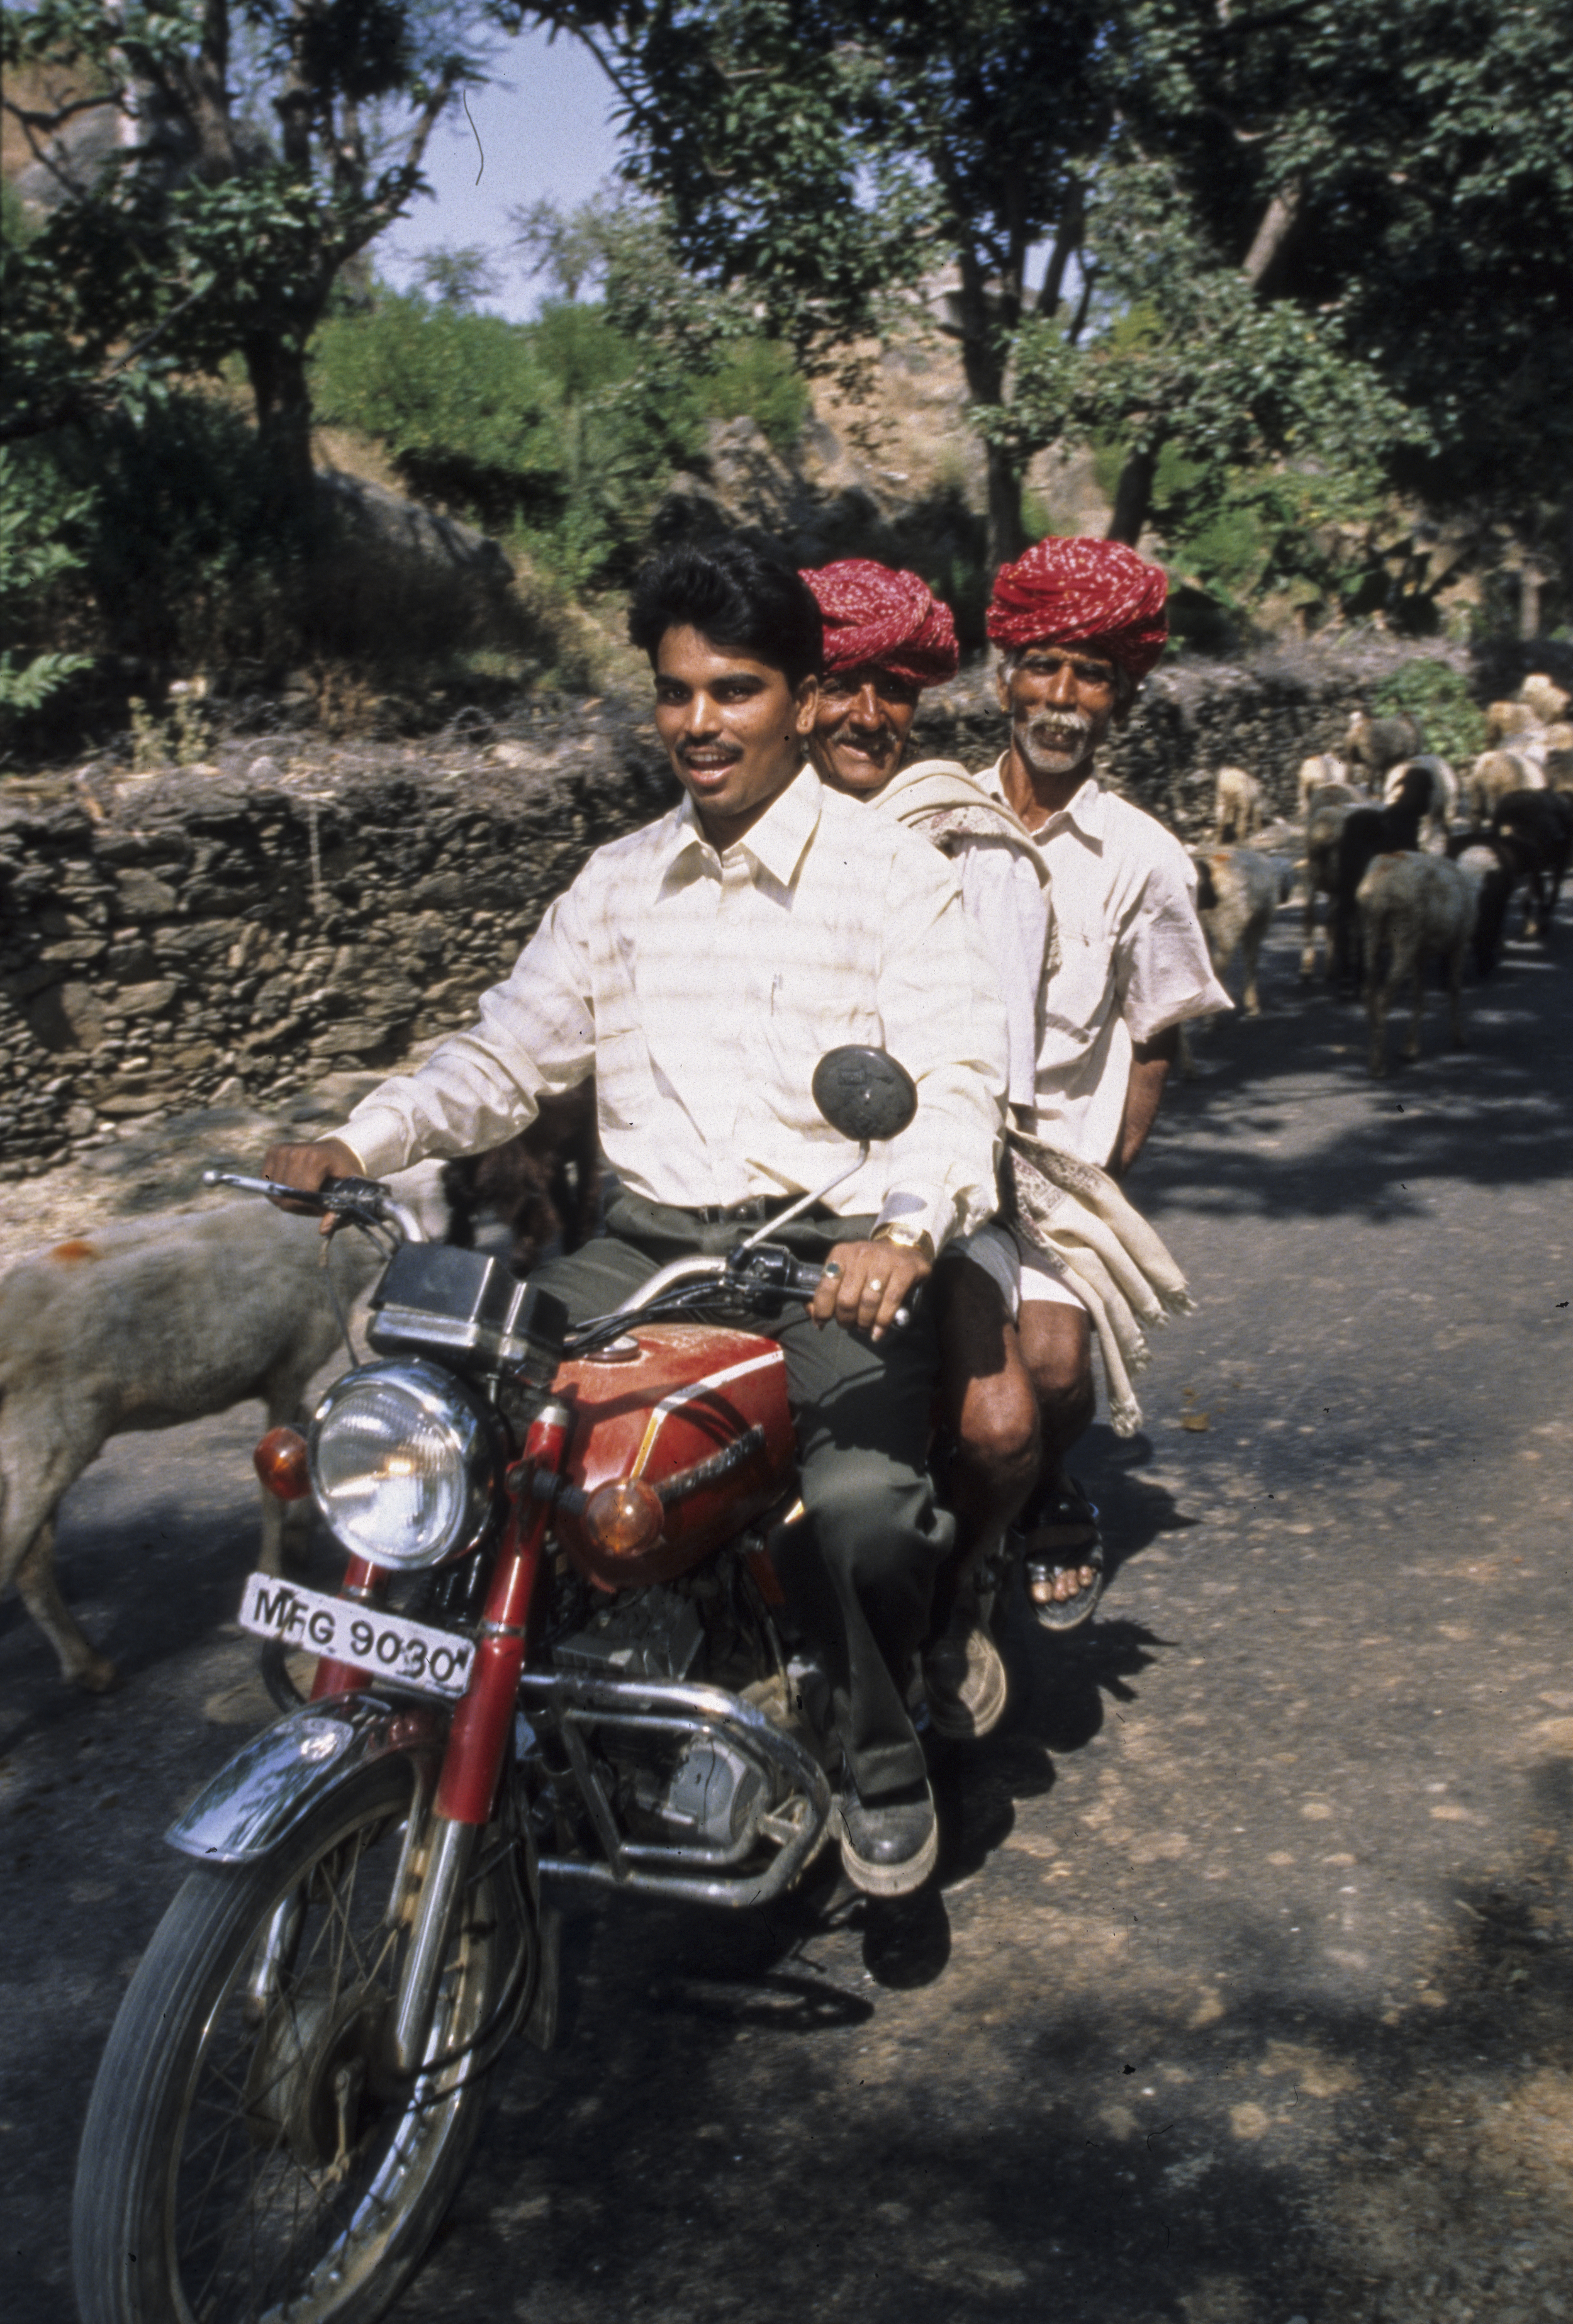 Motorized sheep herders